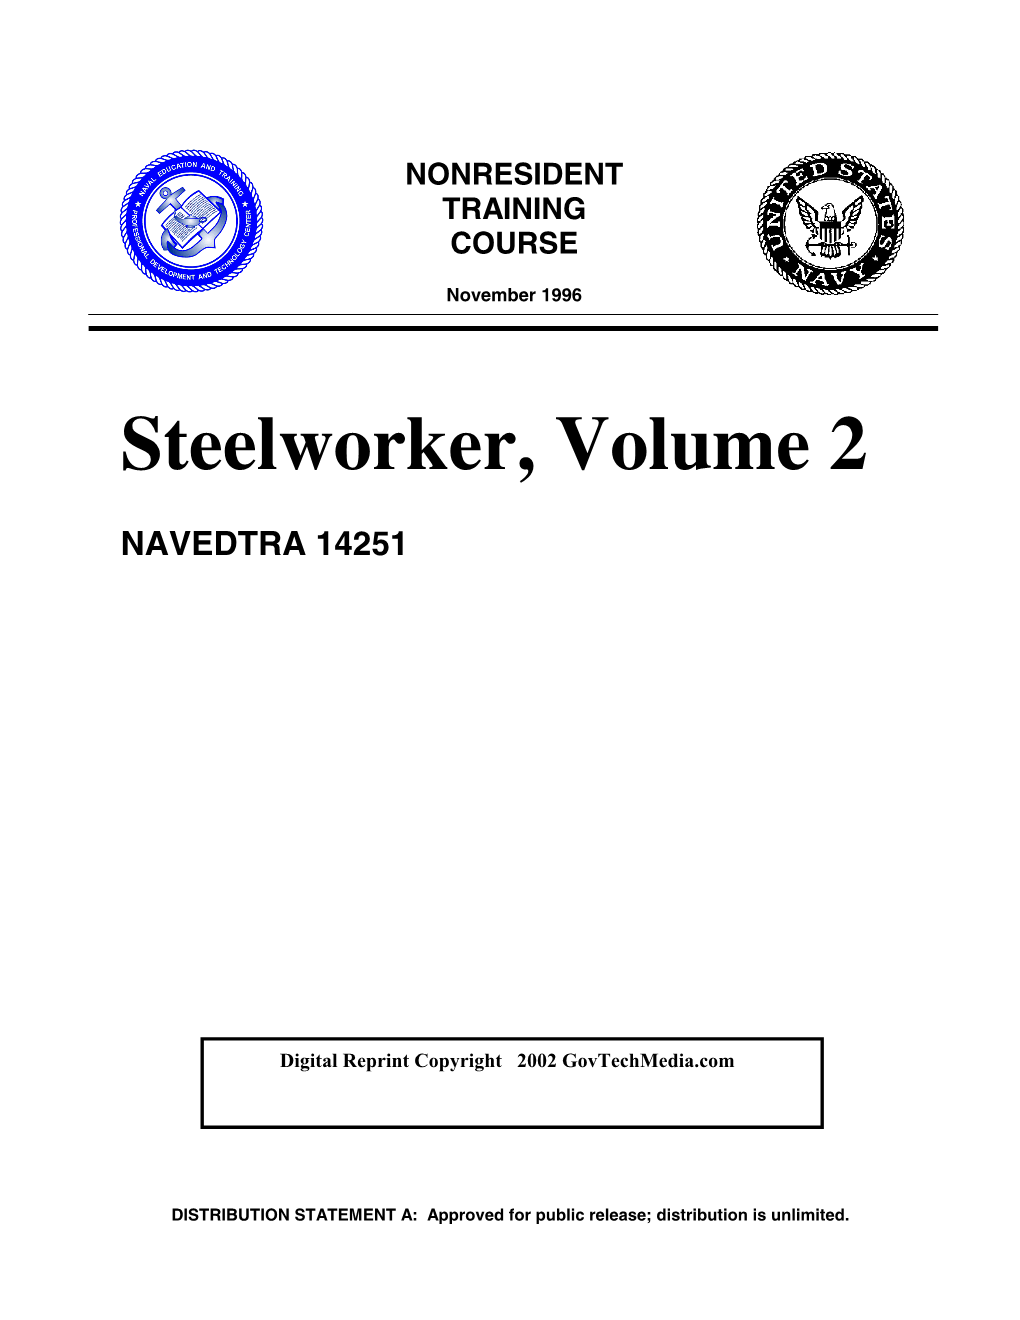 Steelworker, Volume 2